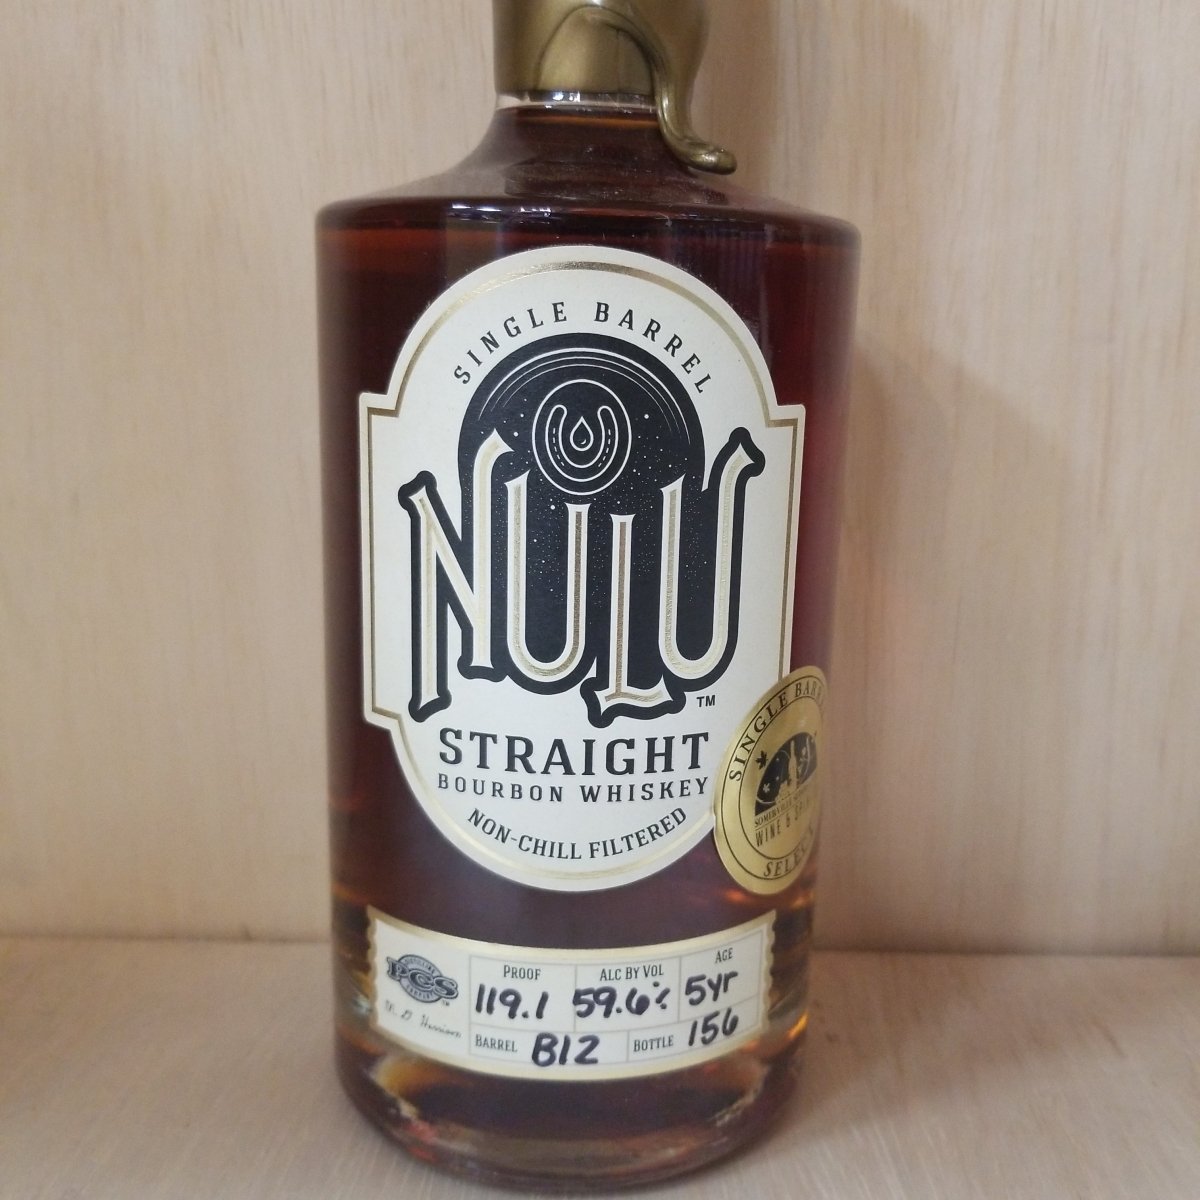 Nulo Single Barrel Strength Straight Bourbon 750ml (Barrel B12, proof 119.1) - Sip & Say